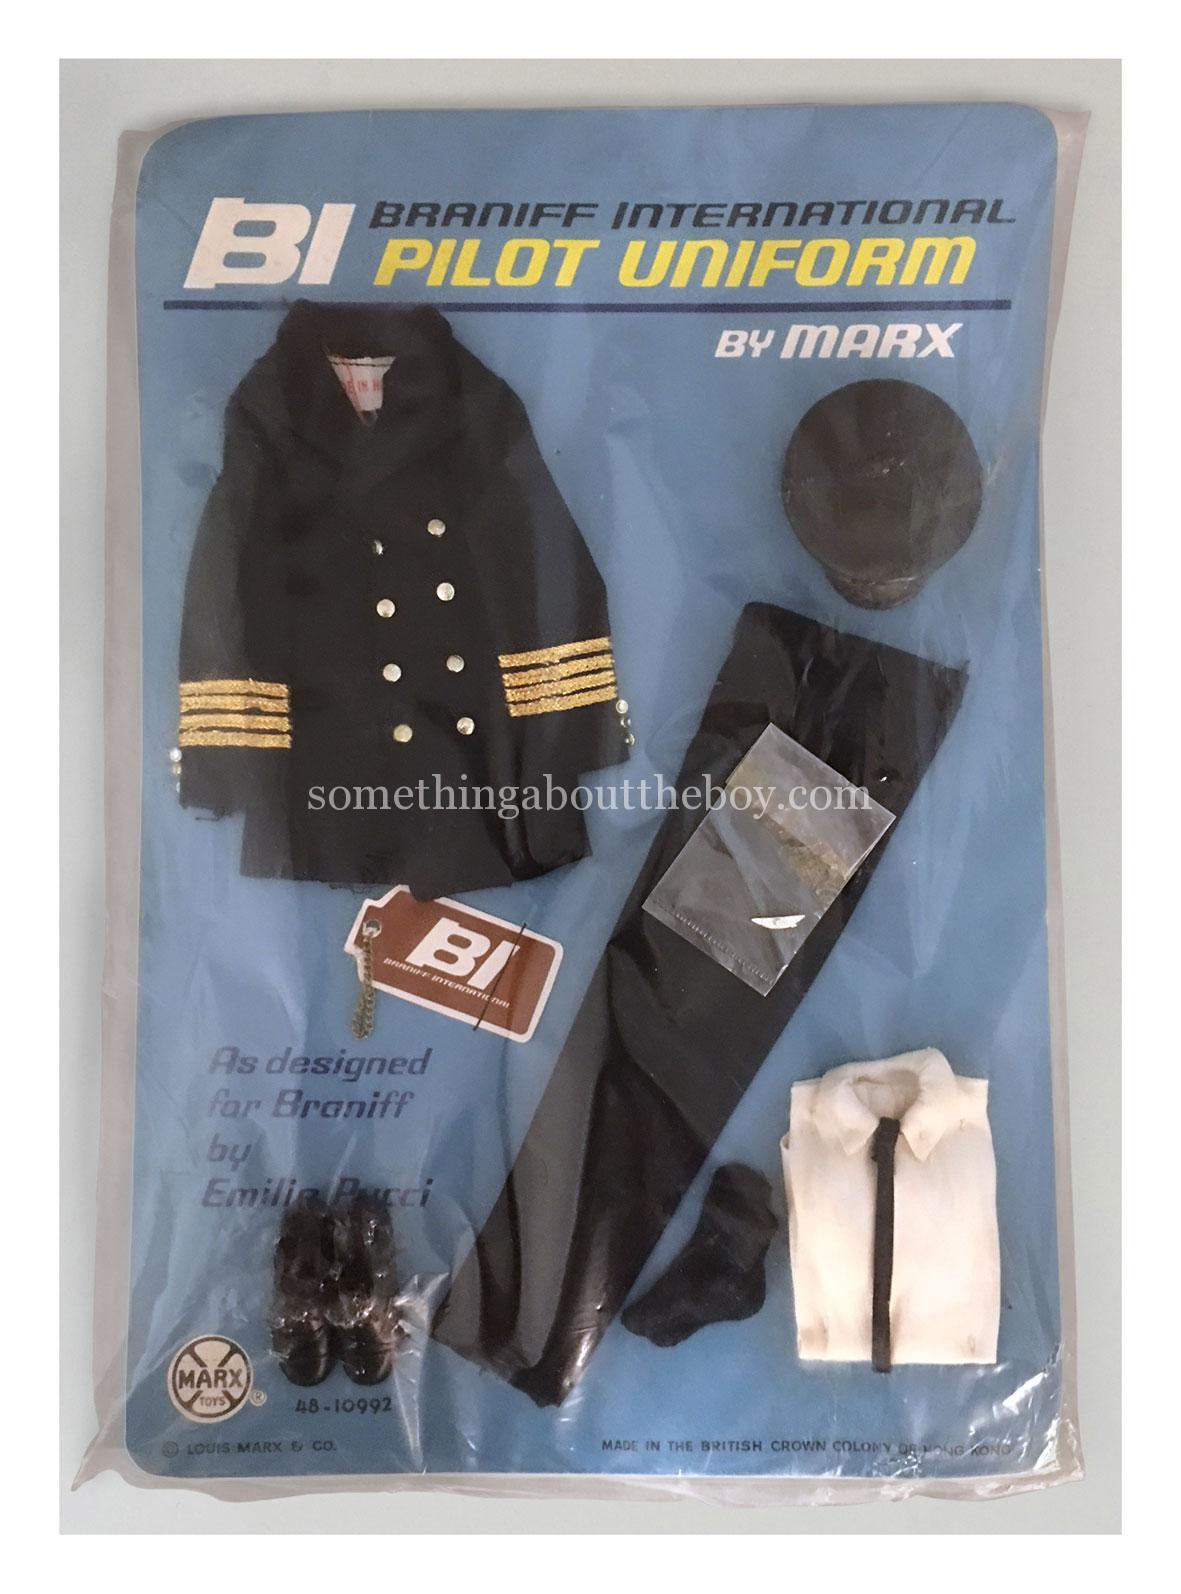 1967 #48-10992 Braniff Pilot Uniform in original packaging